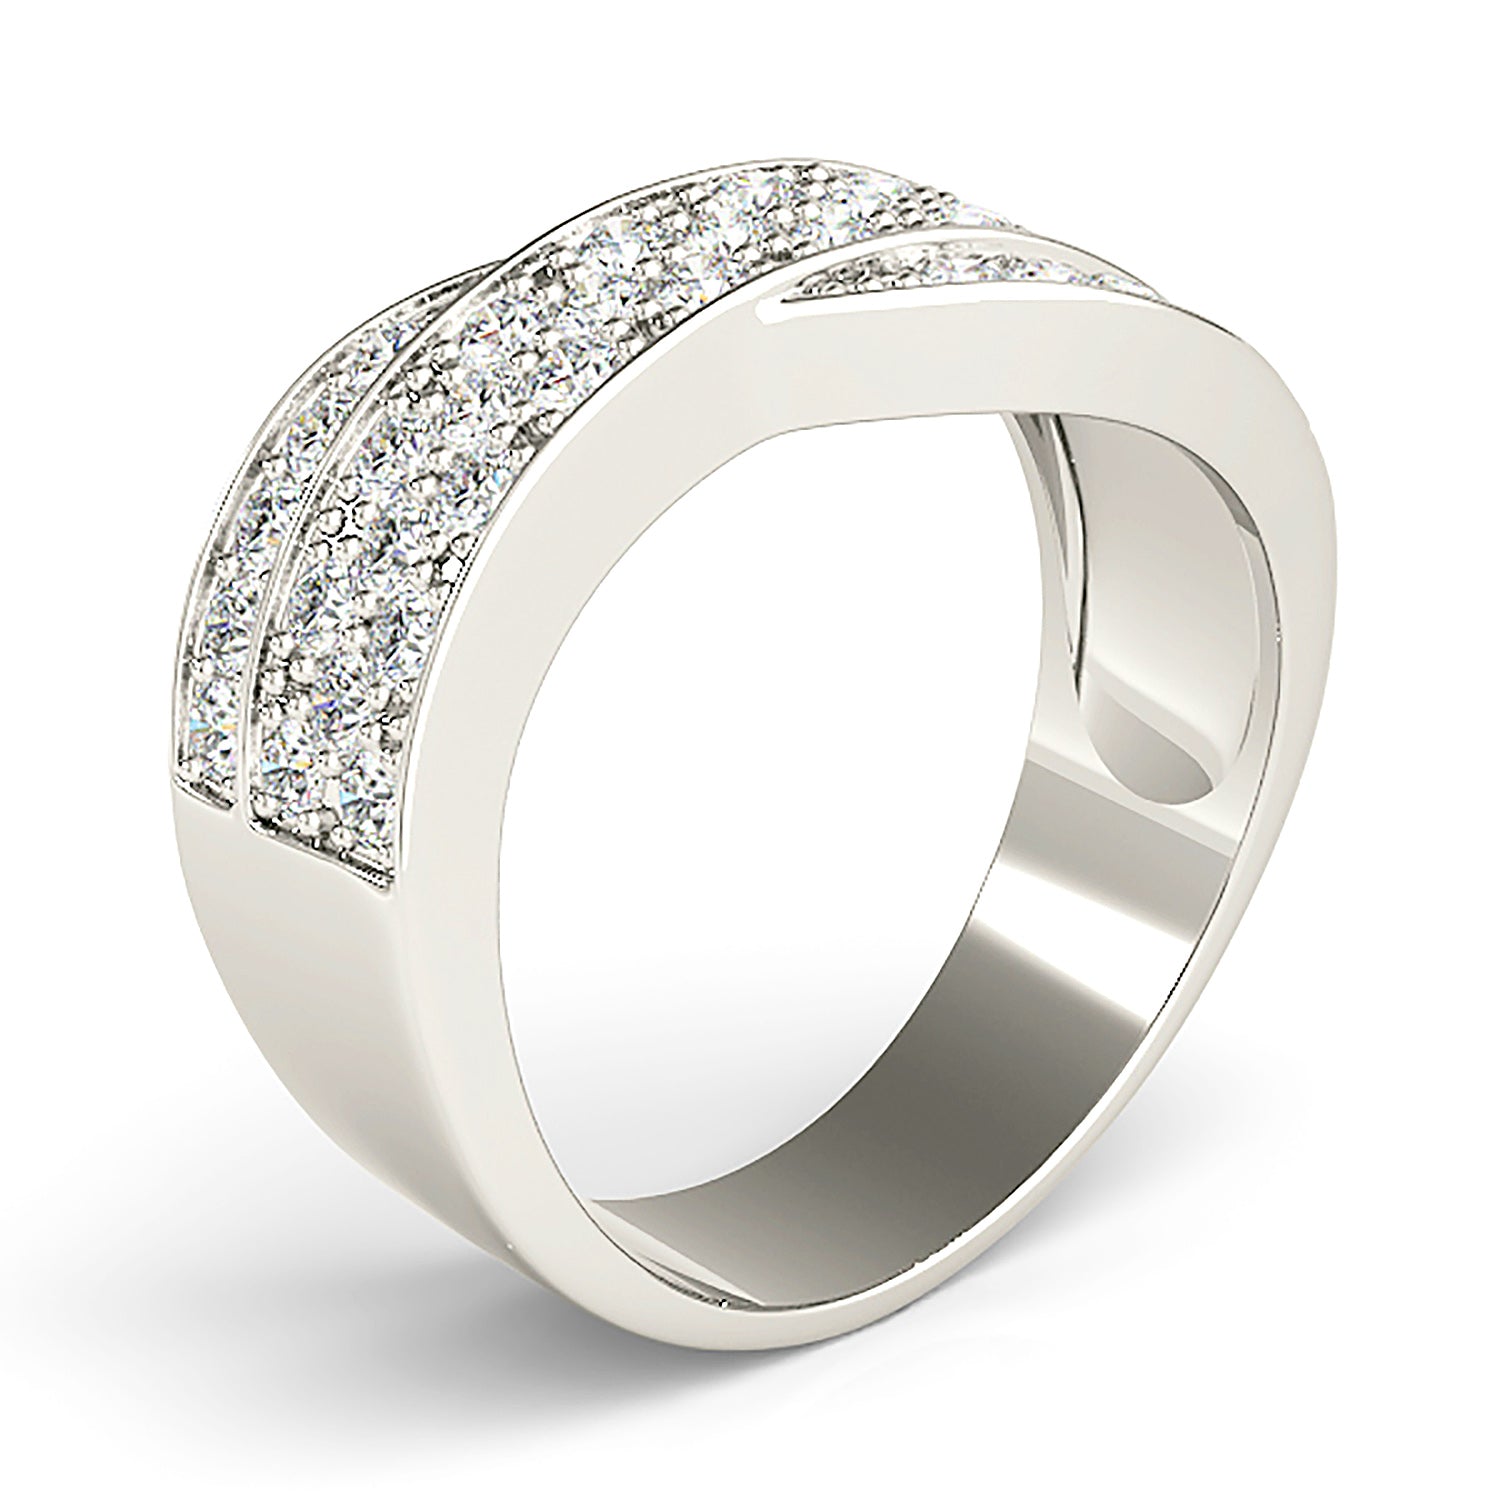 Diamond Statement Ring - 14K/18K Solid White Gold or Platinum | Pave Set Diamond Ring | Slightly Crossed Diamond Ring-in 14K/18K White, Yellow, Rose Gold and Platinum - Christmas Jewelry Gift -VIRABYANI